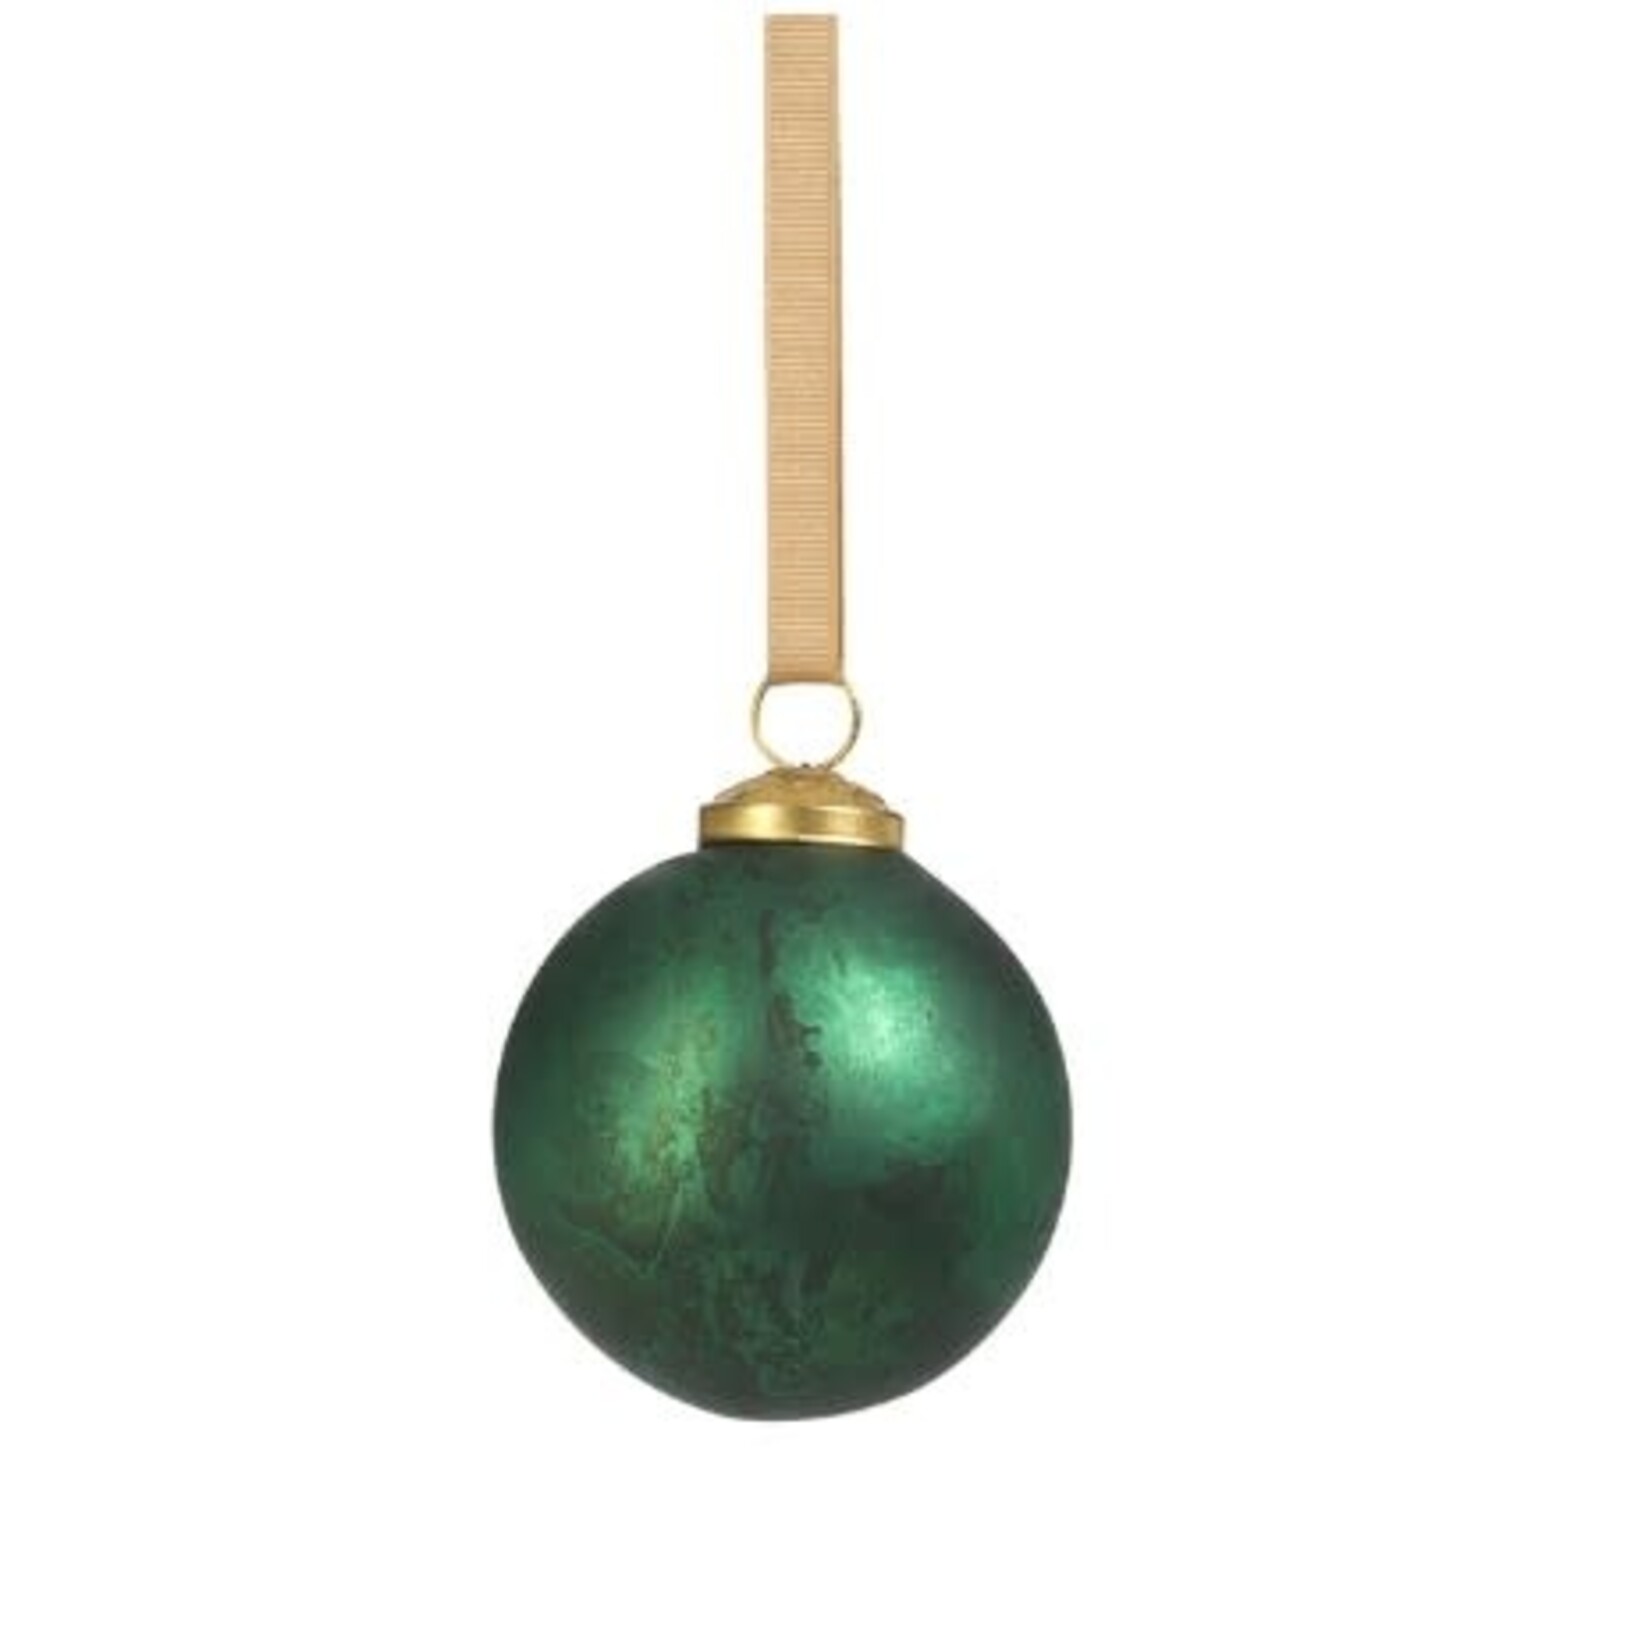 Zodax Rustic Metallic Ornament